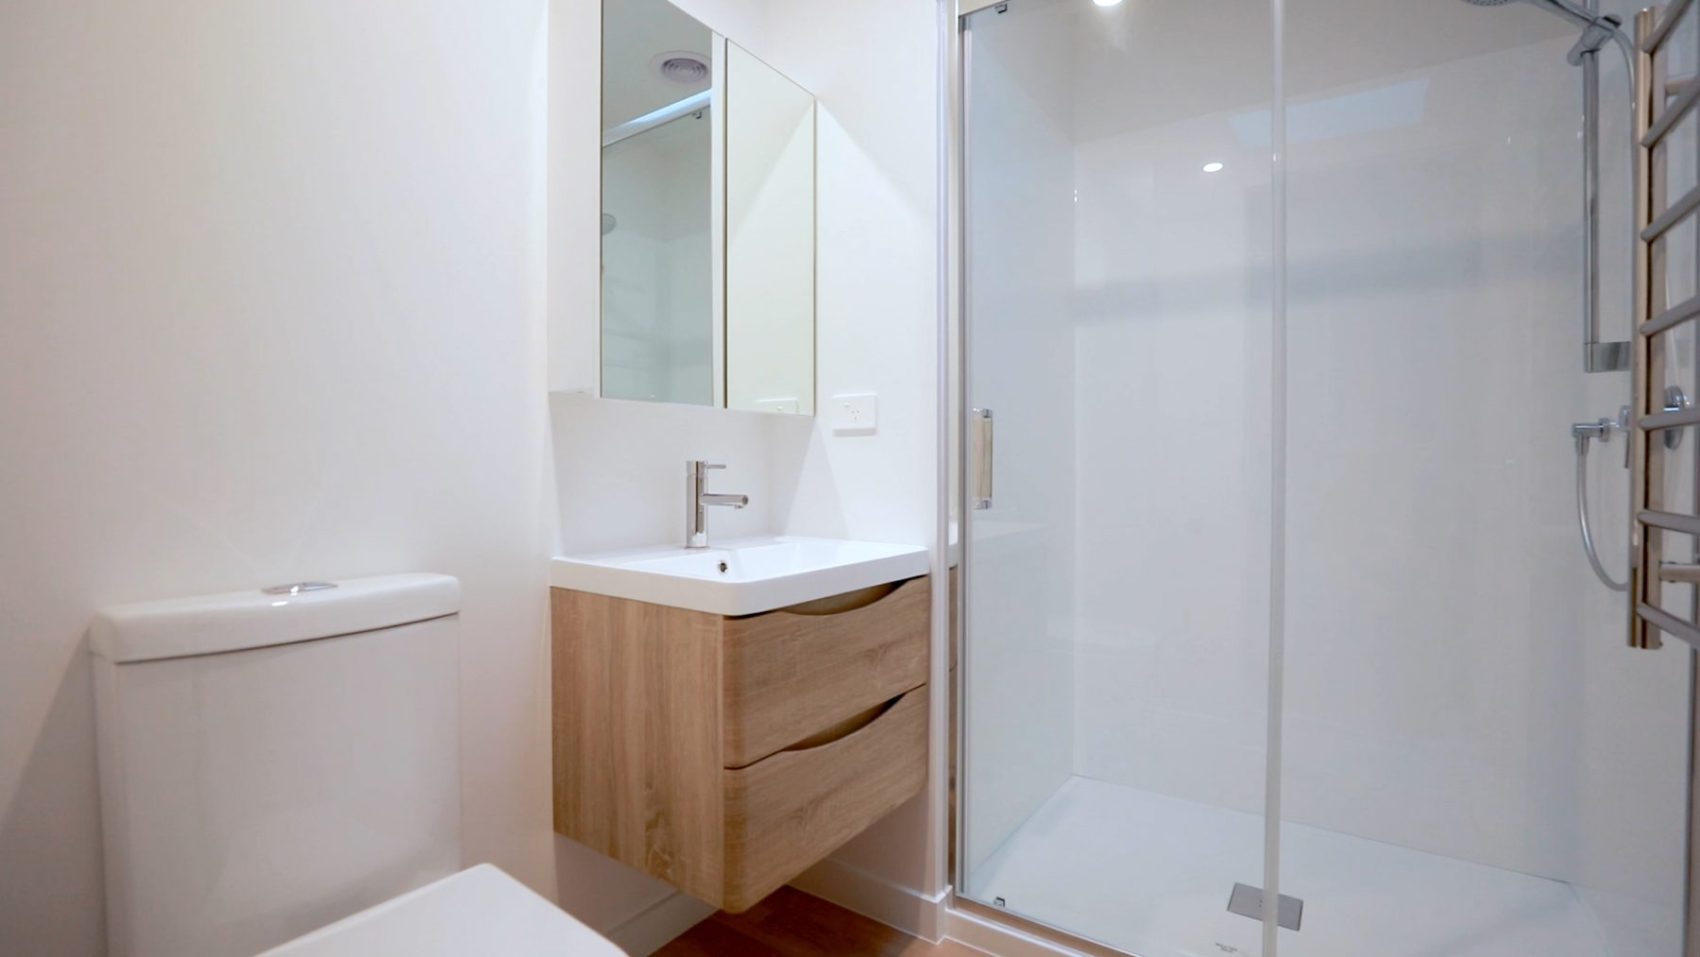 Bathroom | Walkthrough a 20-house Modern Development with Rob Teina | Plumbing World Helps